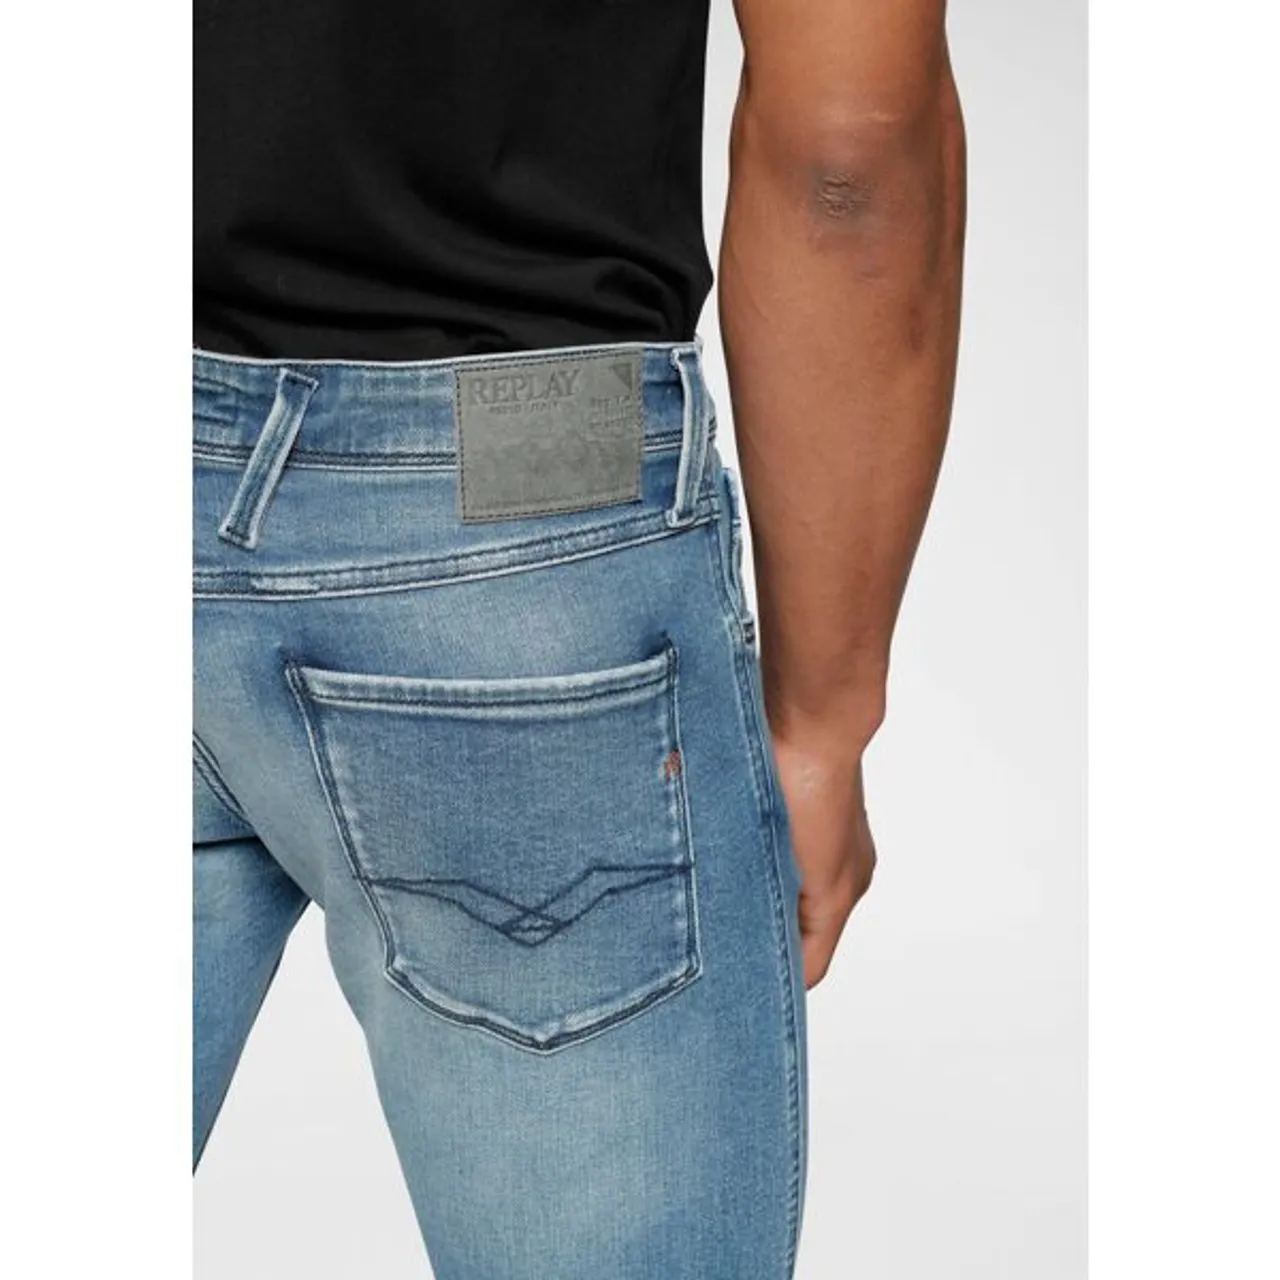 Slim-fit-Jeans REPLAY "Anbass Superstretch" Gr. 30, Länge 34, blau (medium, blue, mid) Herren Jeans Slim Fit